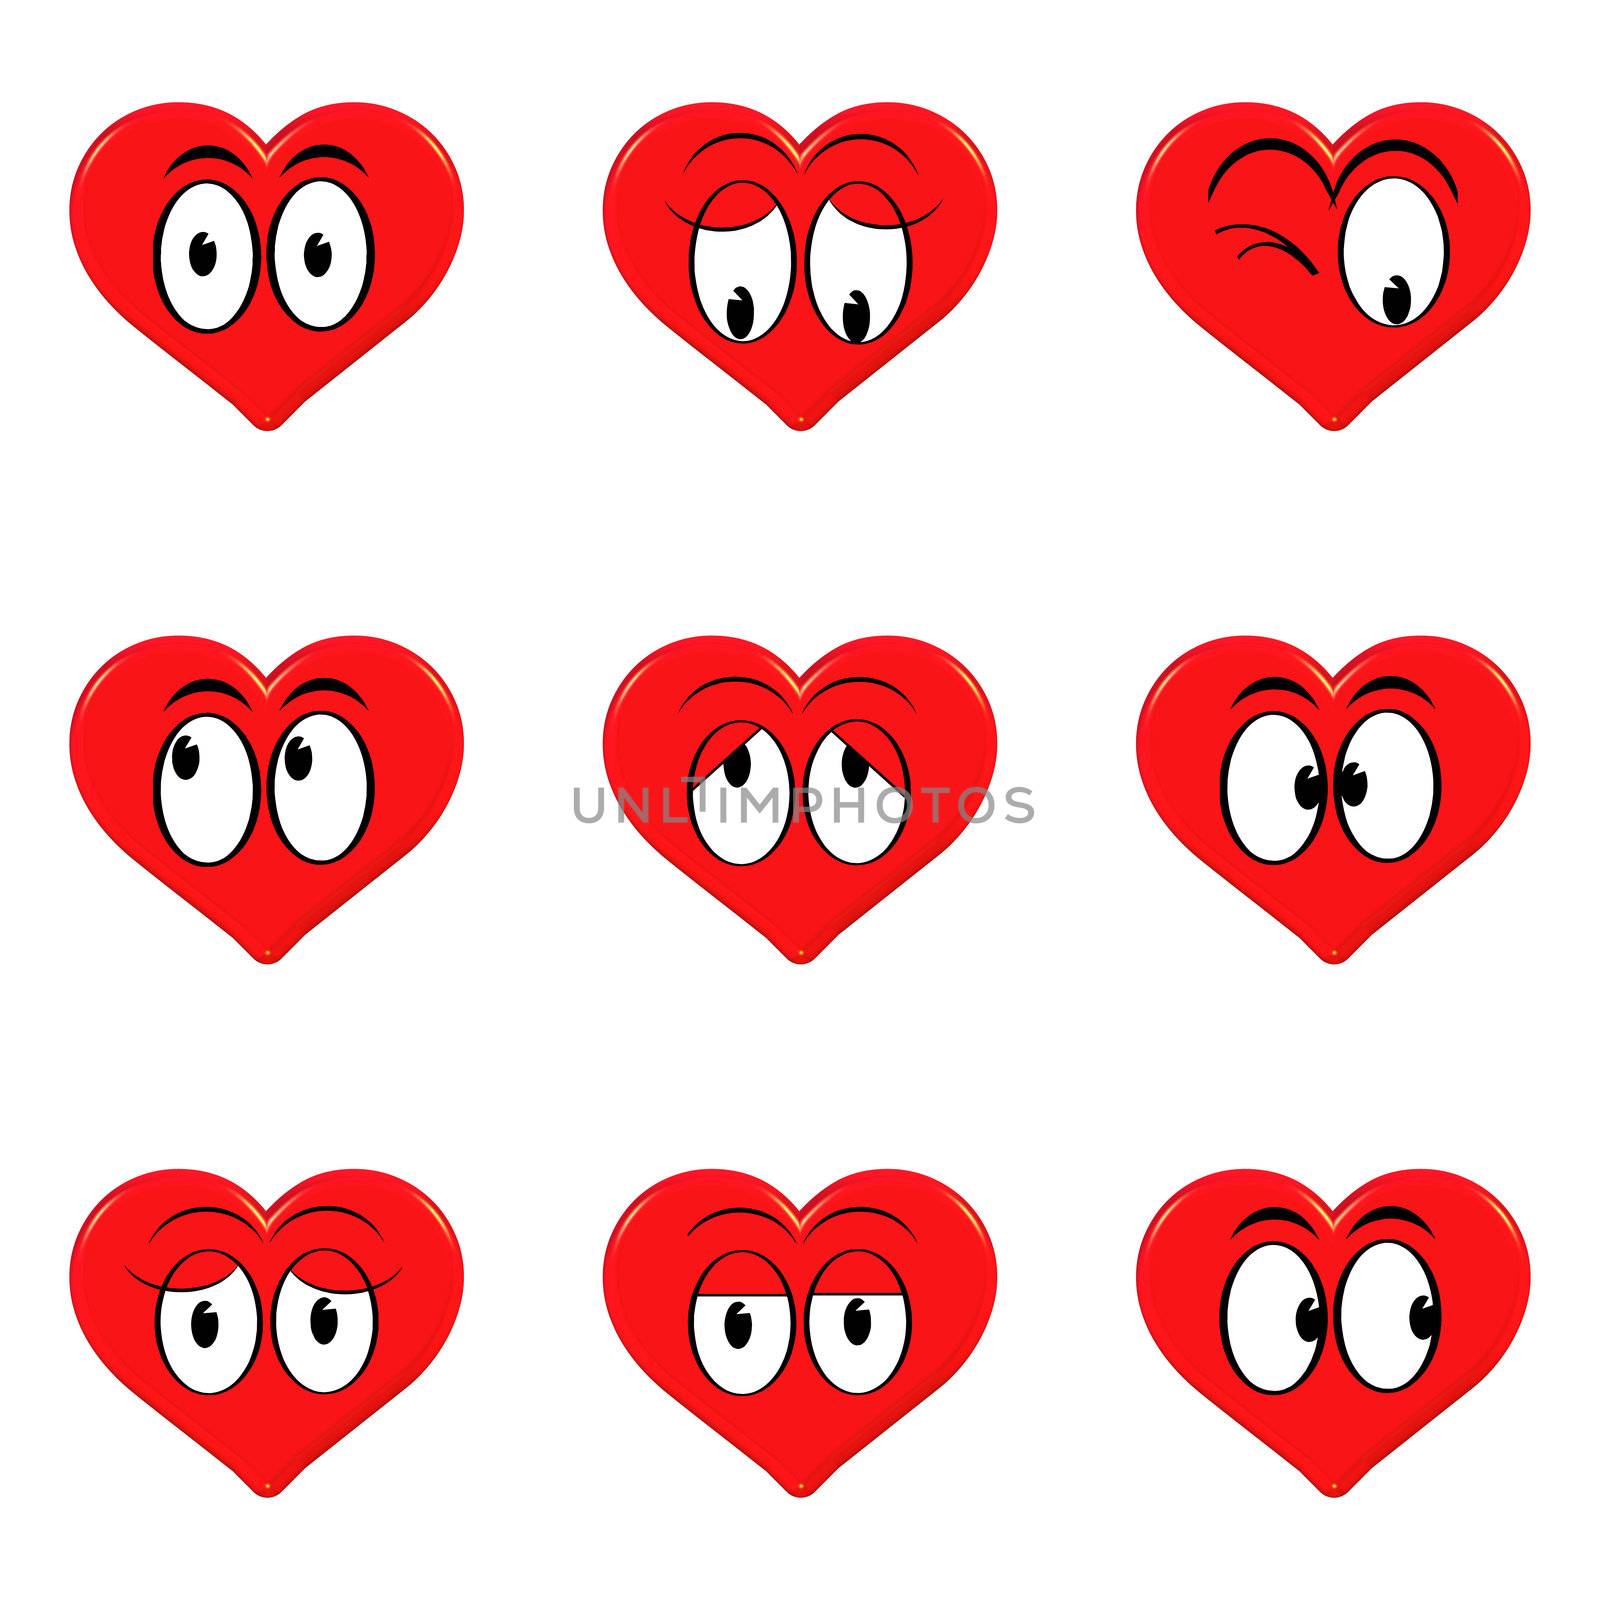 hearts emoticon by walex101